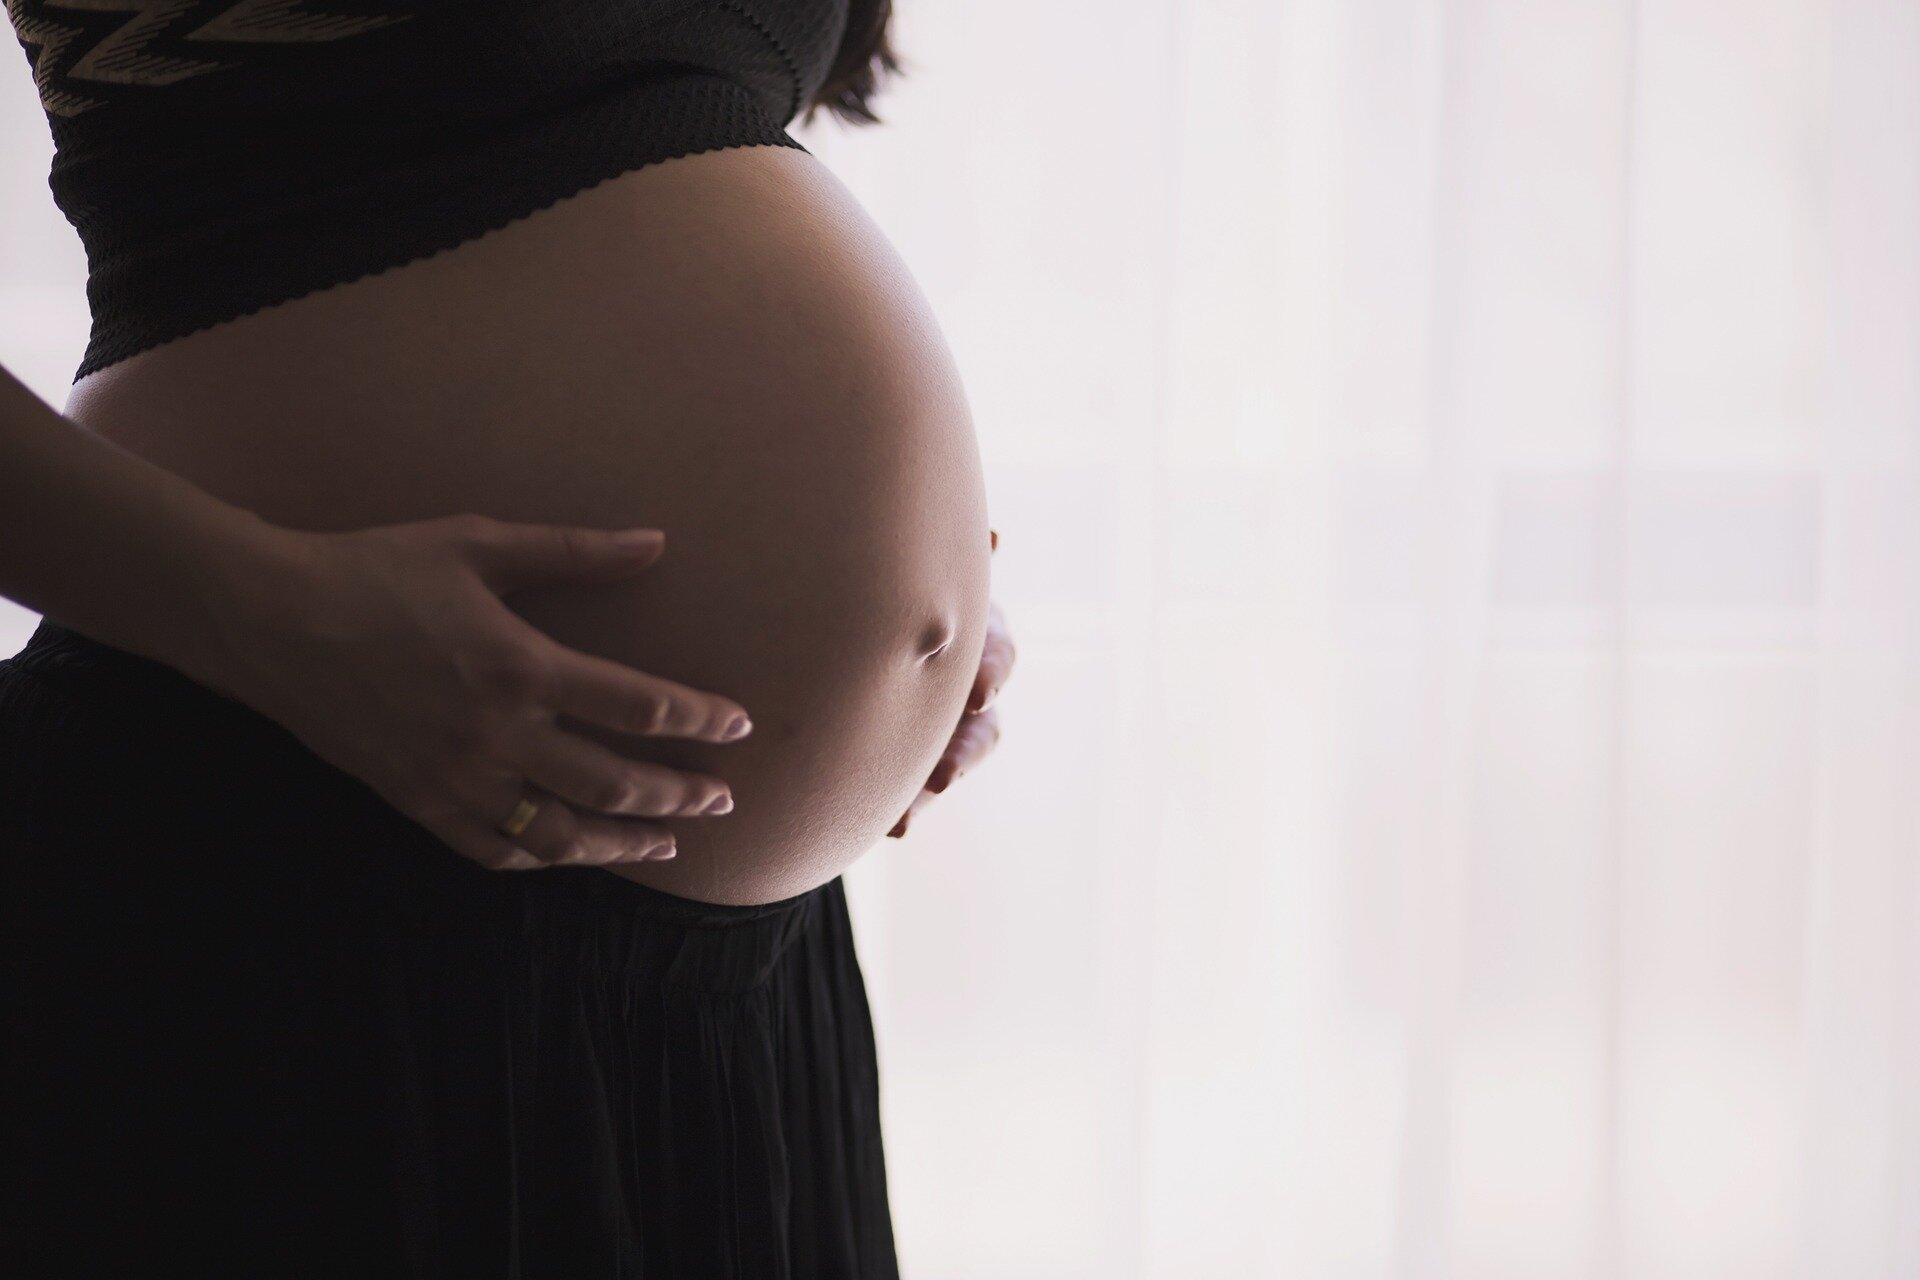 Q&A: Pregnancy and prolapse concerns